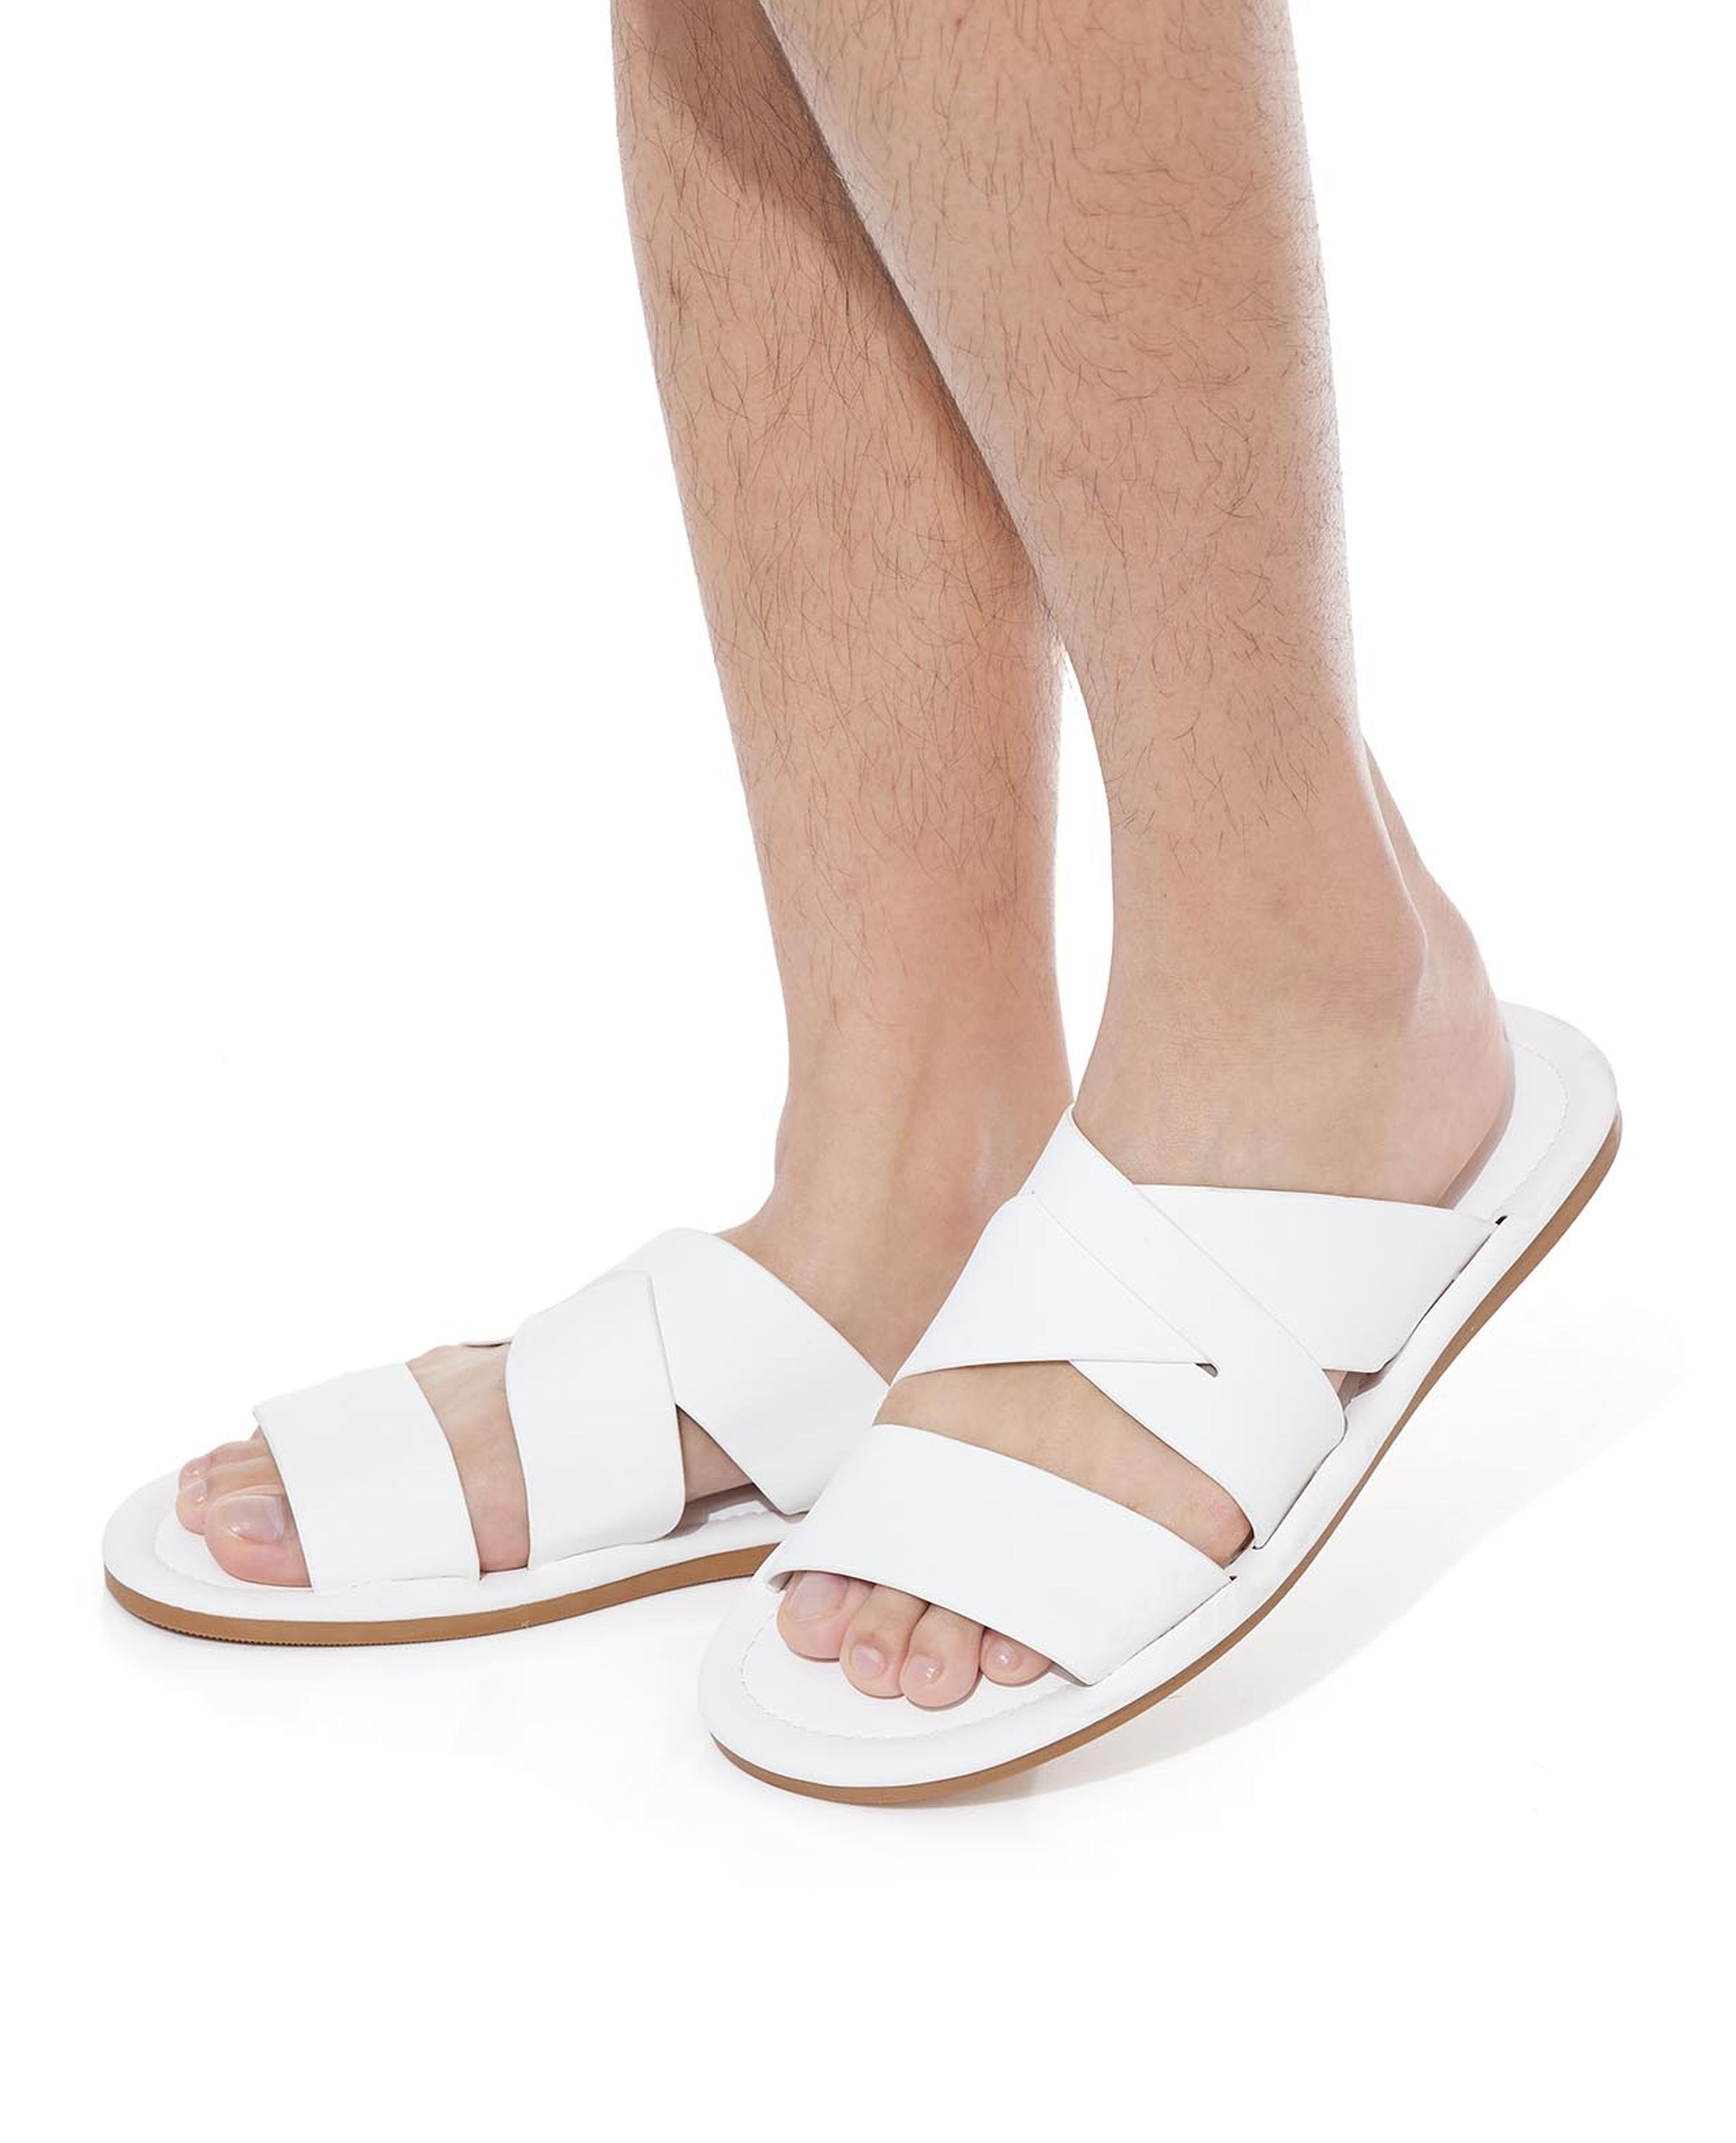 Shop Online Genuine Leather Arabic Sandal For Men | Chic